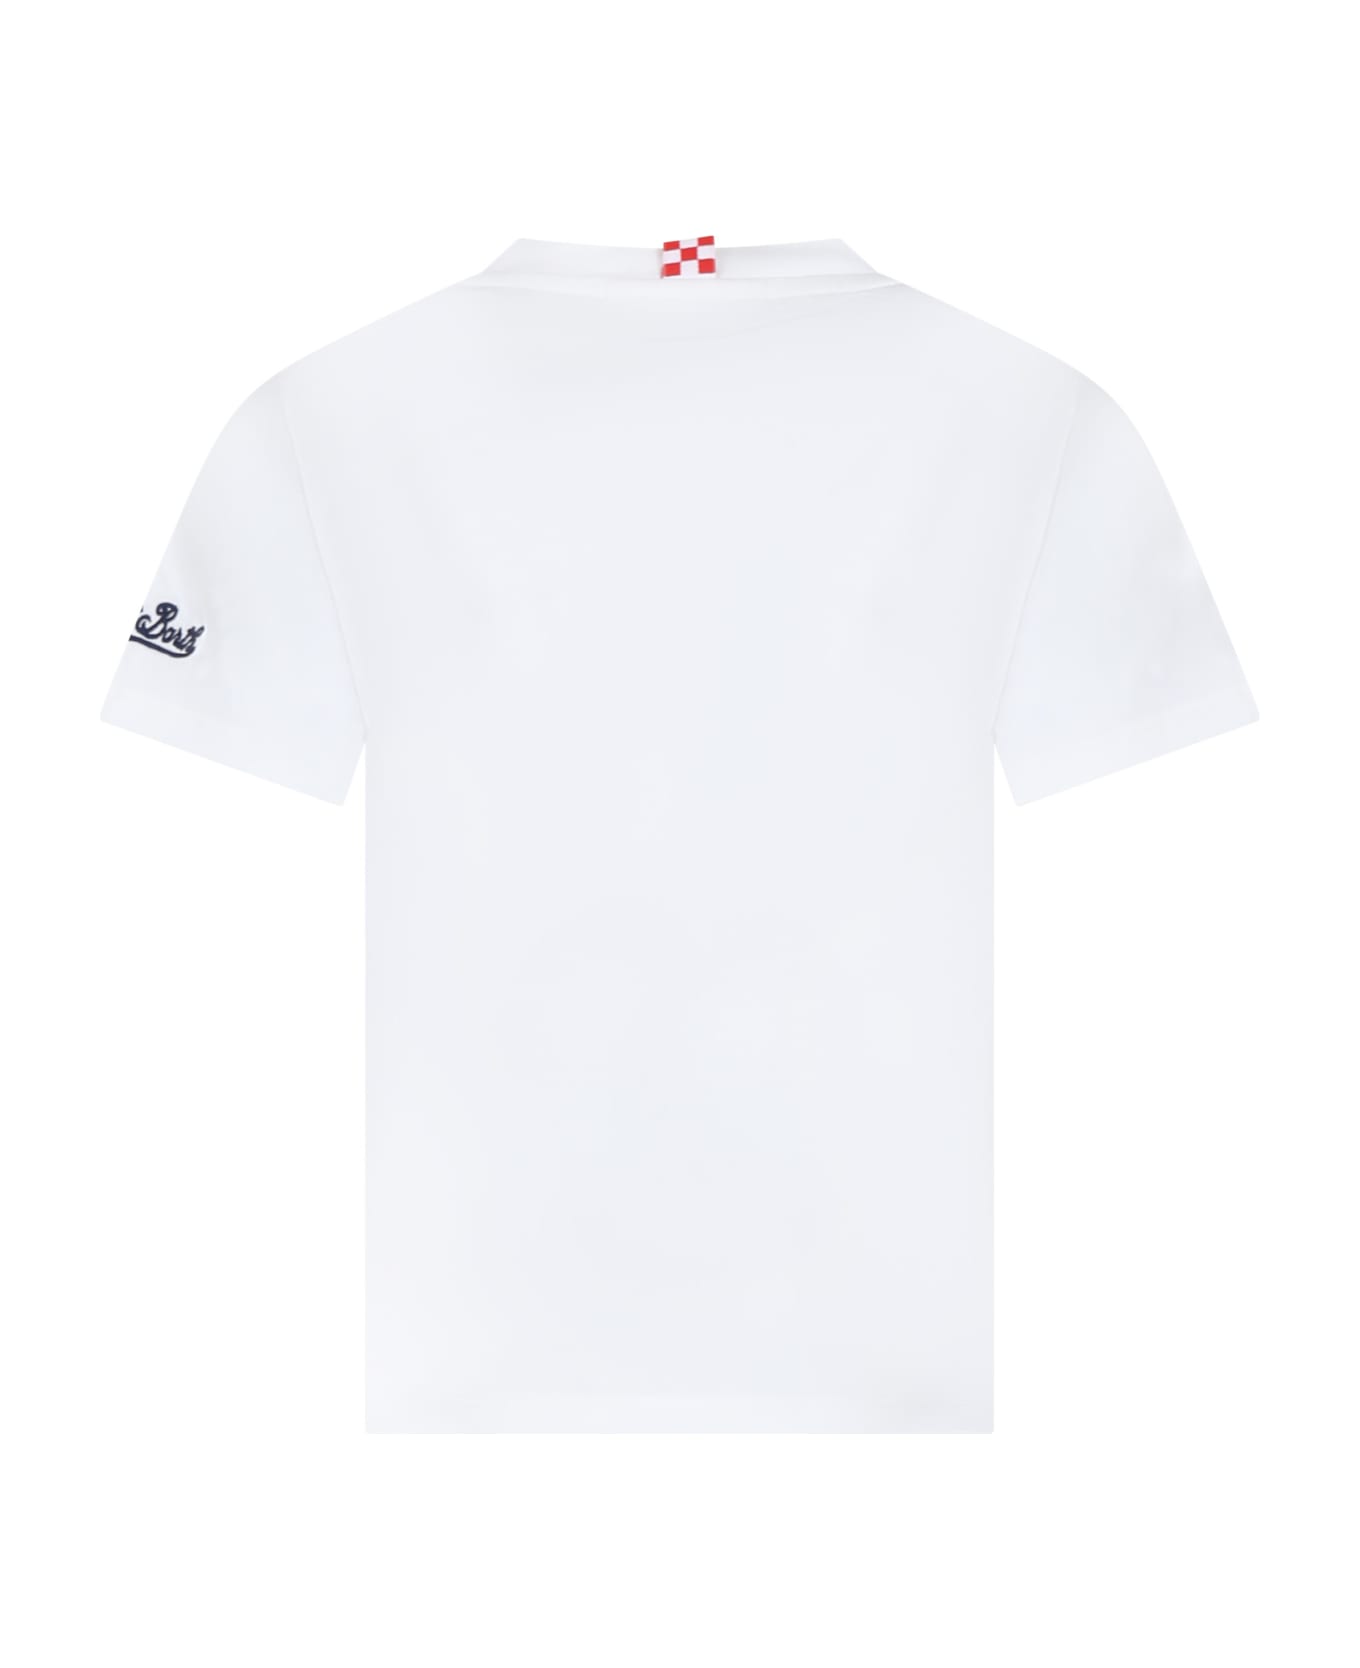 MC2 Saint Barth White T-shirt For Boy With Shark And Writing - White